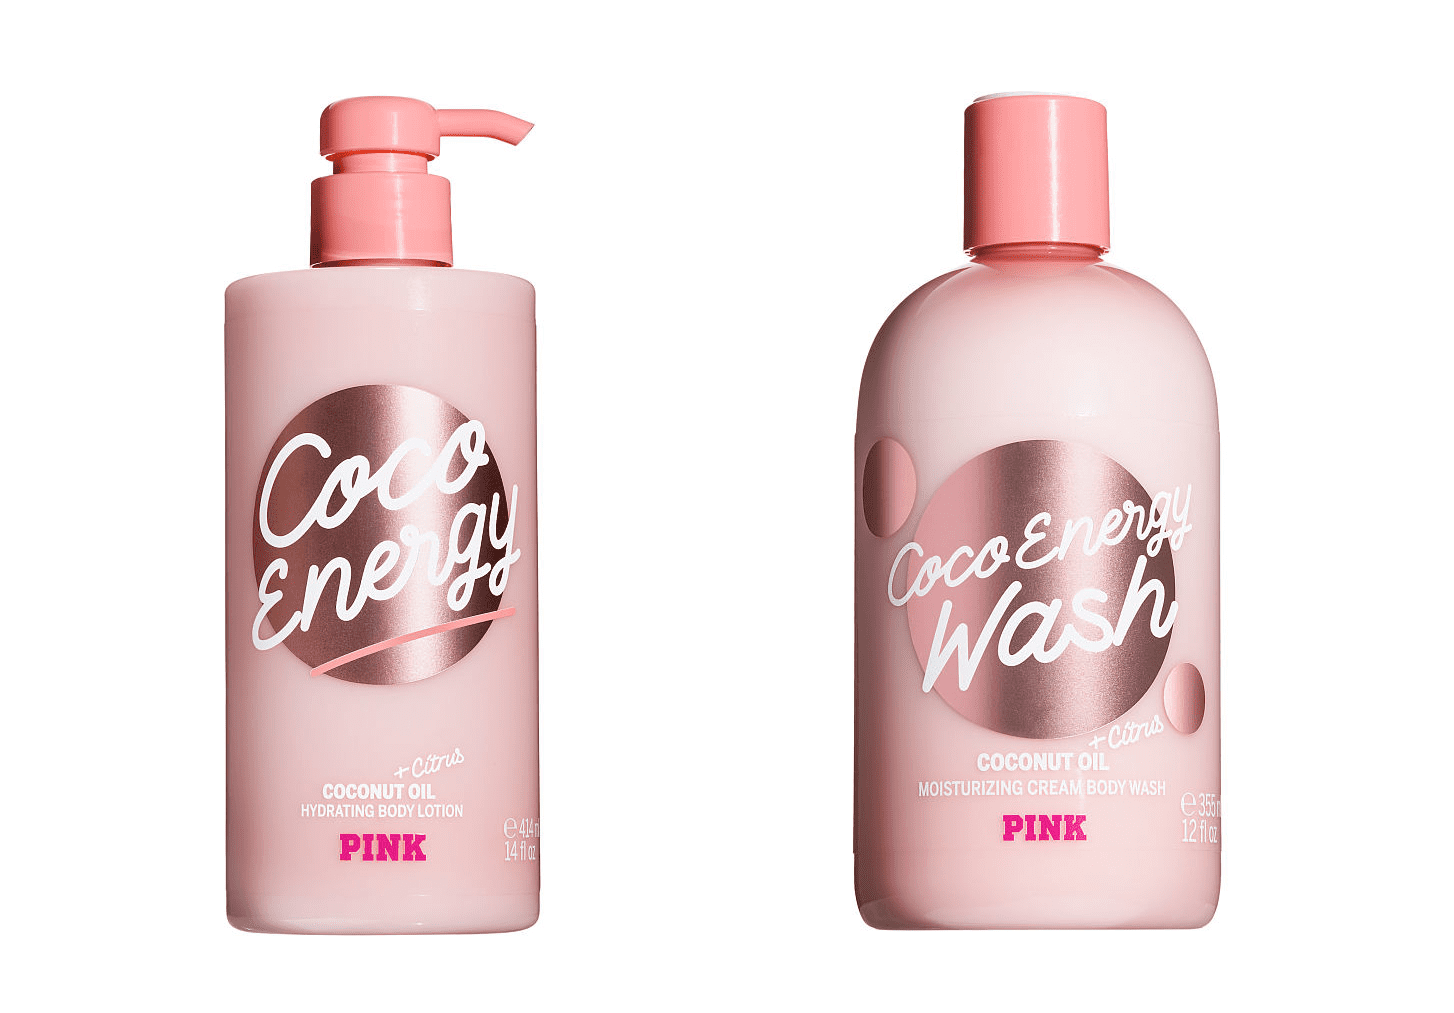 Victoria's Secret Pink Coco Energy Coconut Oil+Citrus Hydrating Body Lotion and Cream Body Wash Set of 2 - Walmart.com